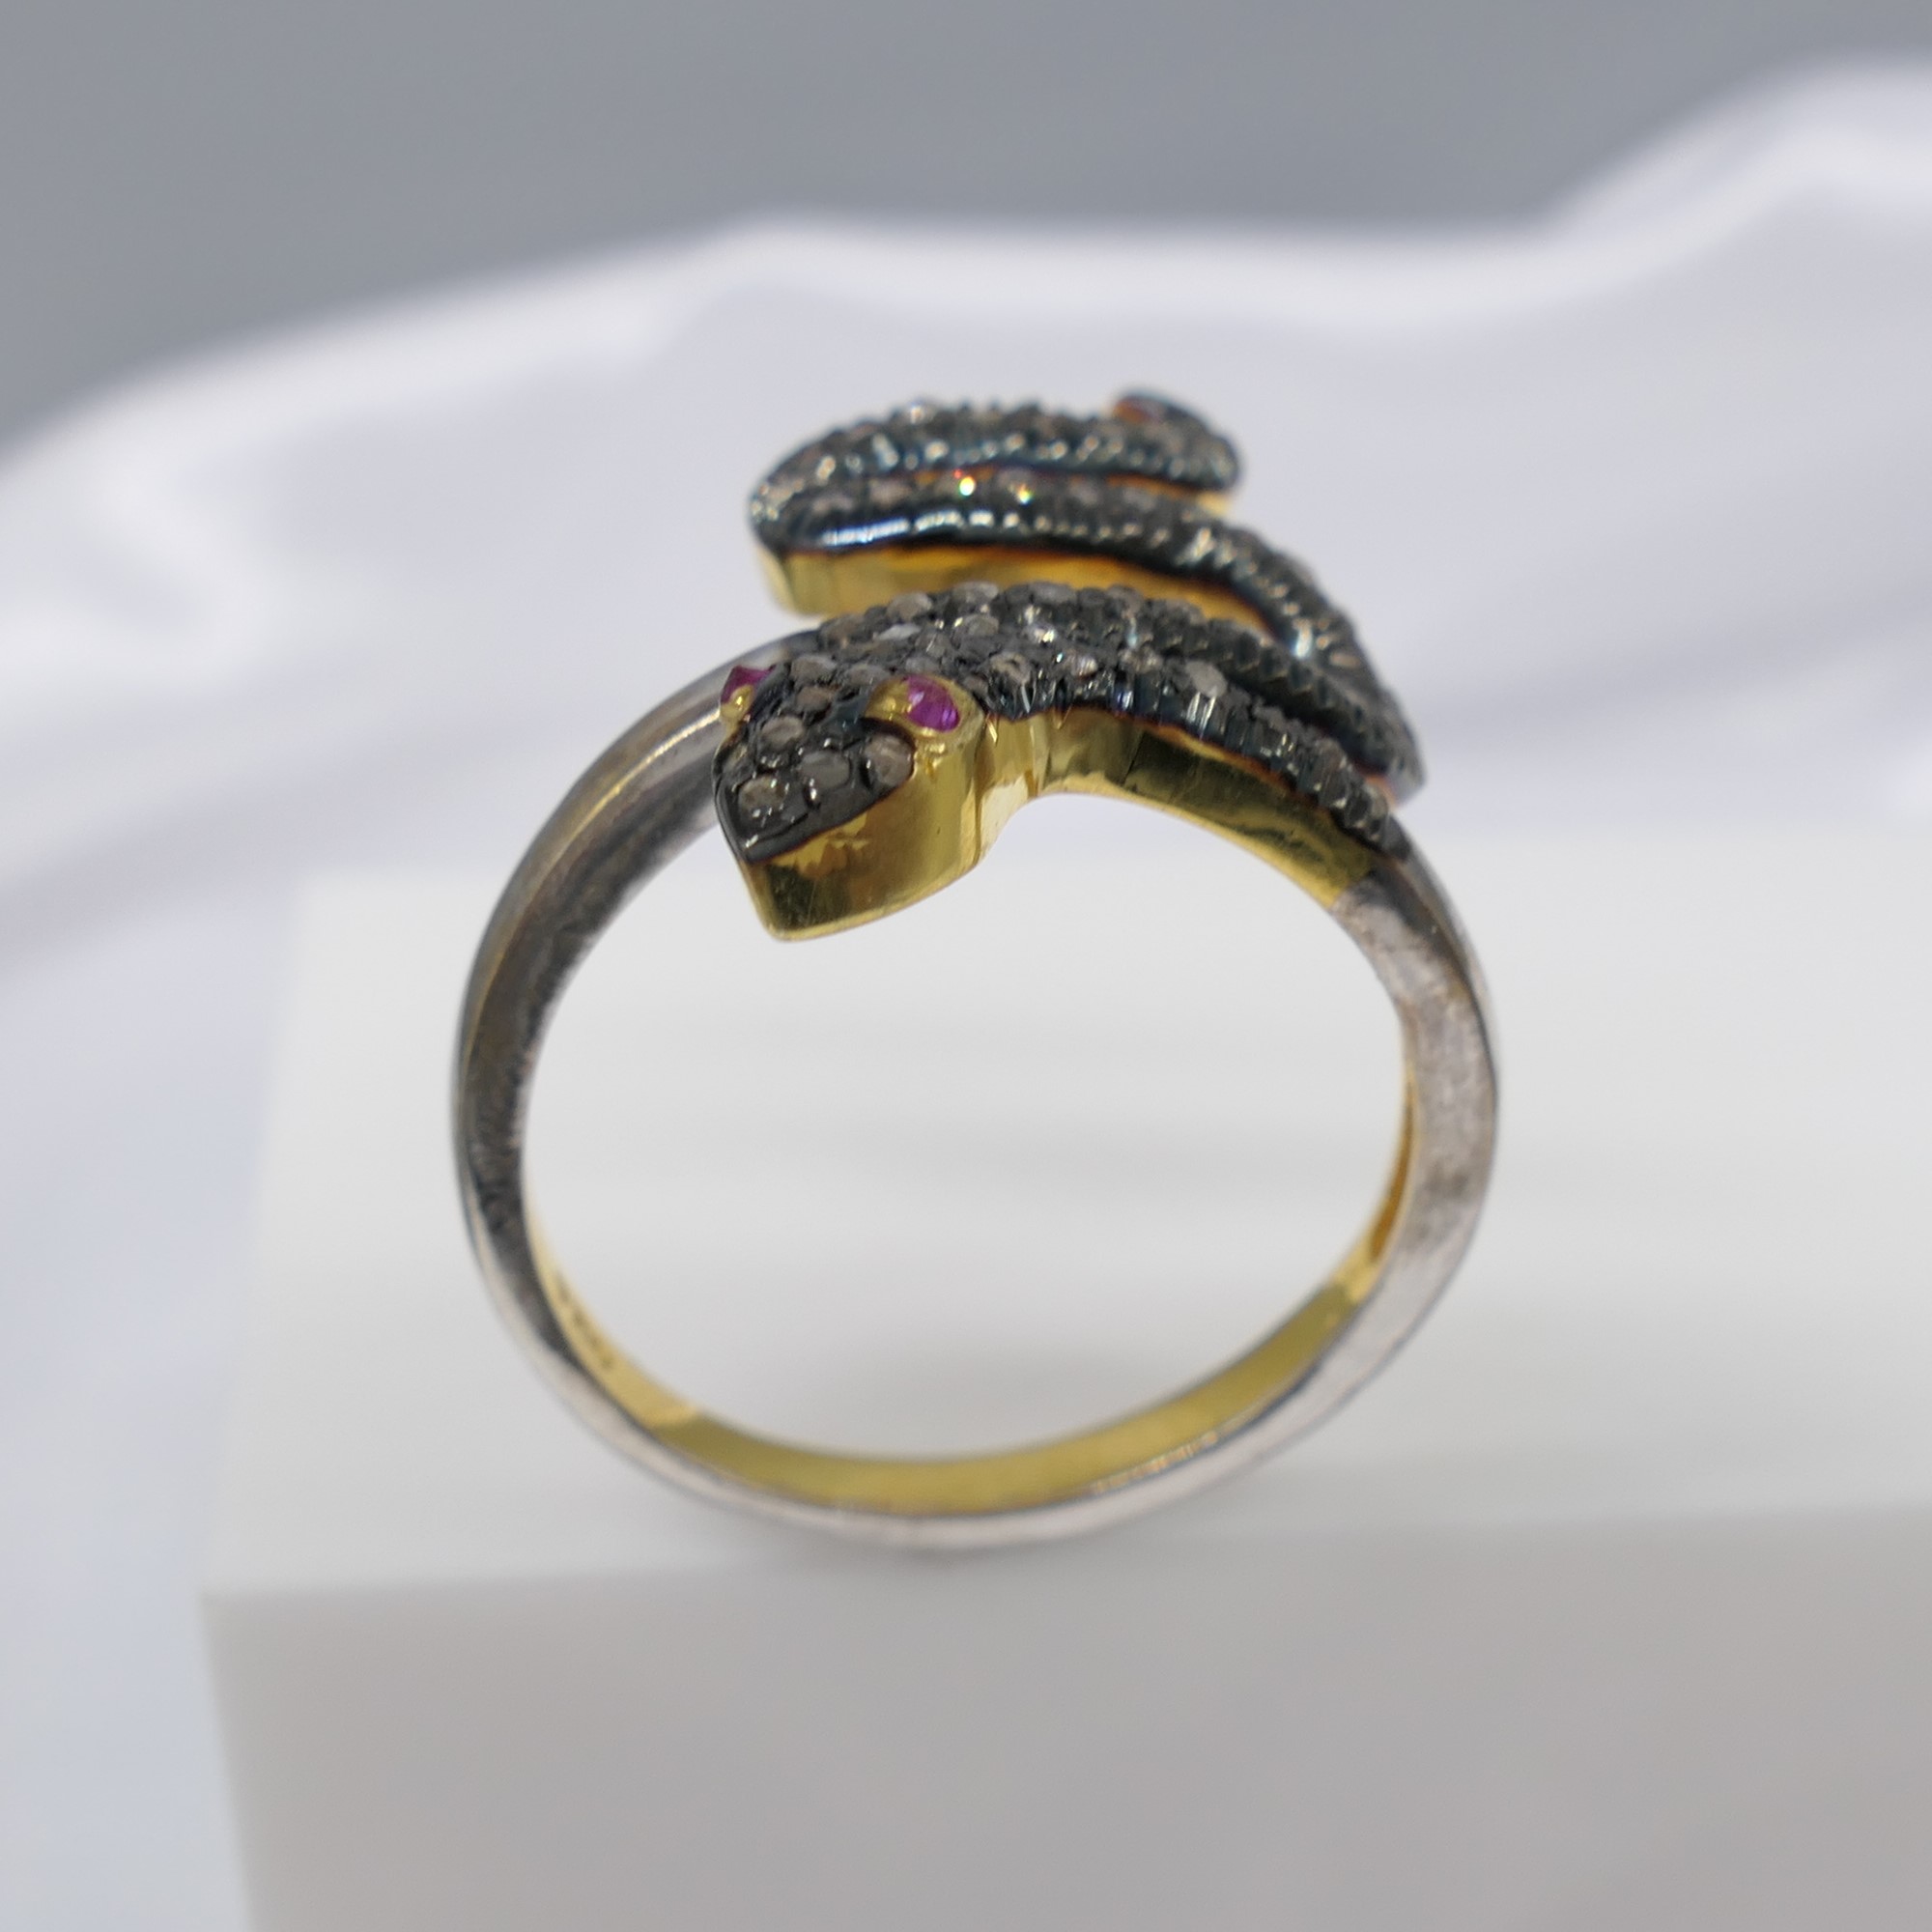 Unusual handmade diamond and ruby snake ring - Image 3 of 6